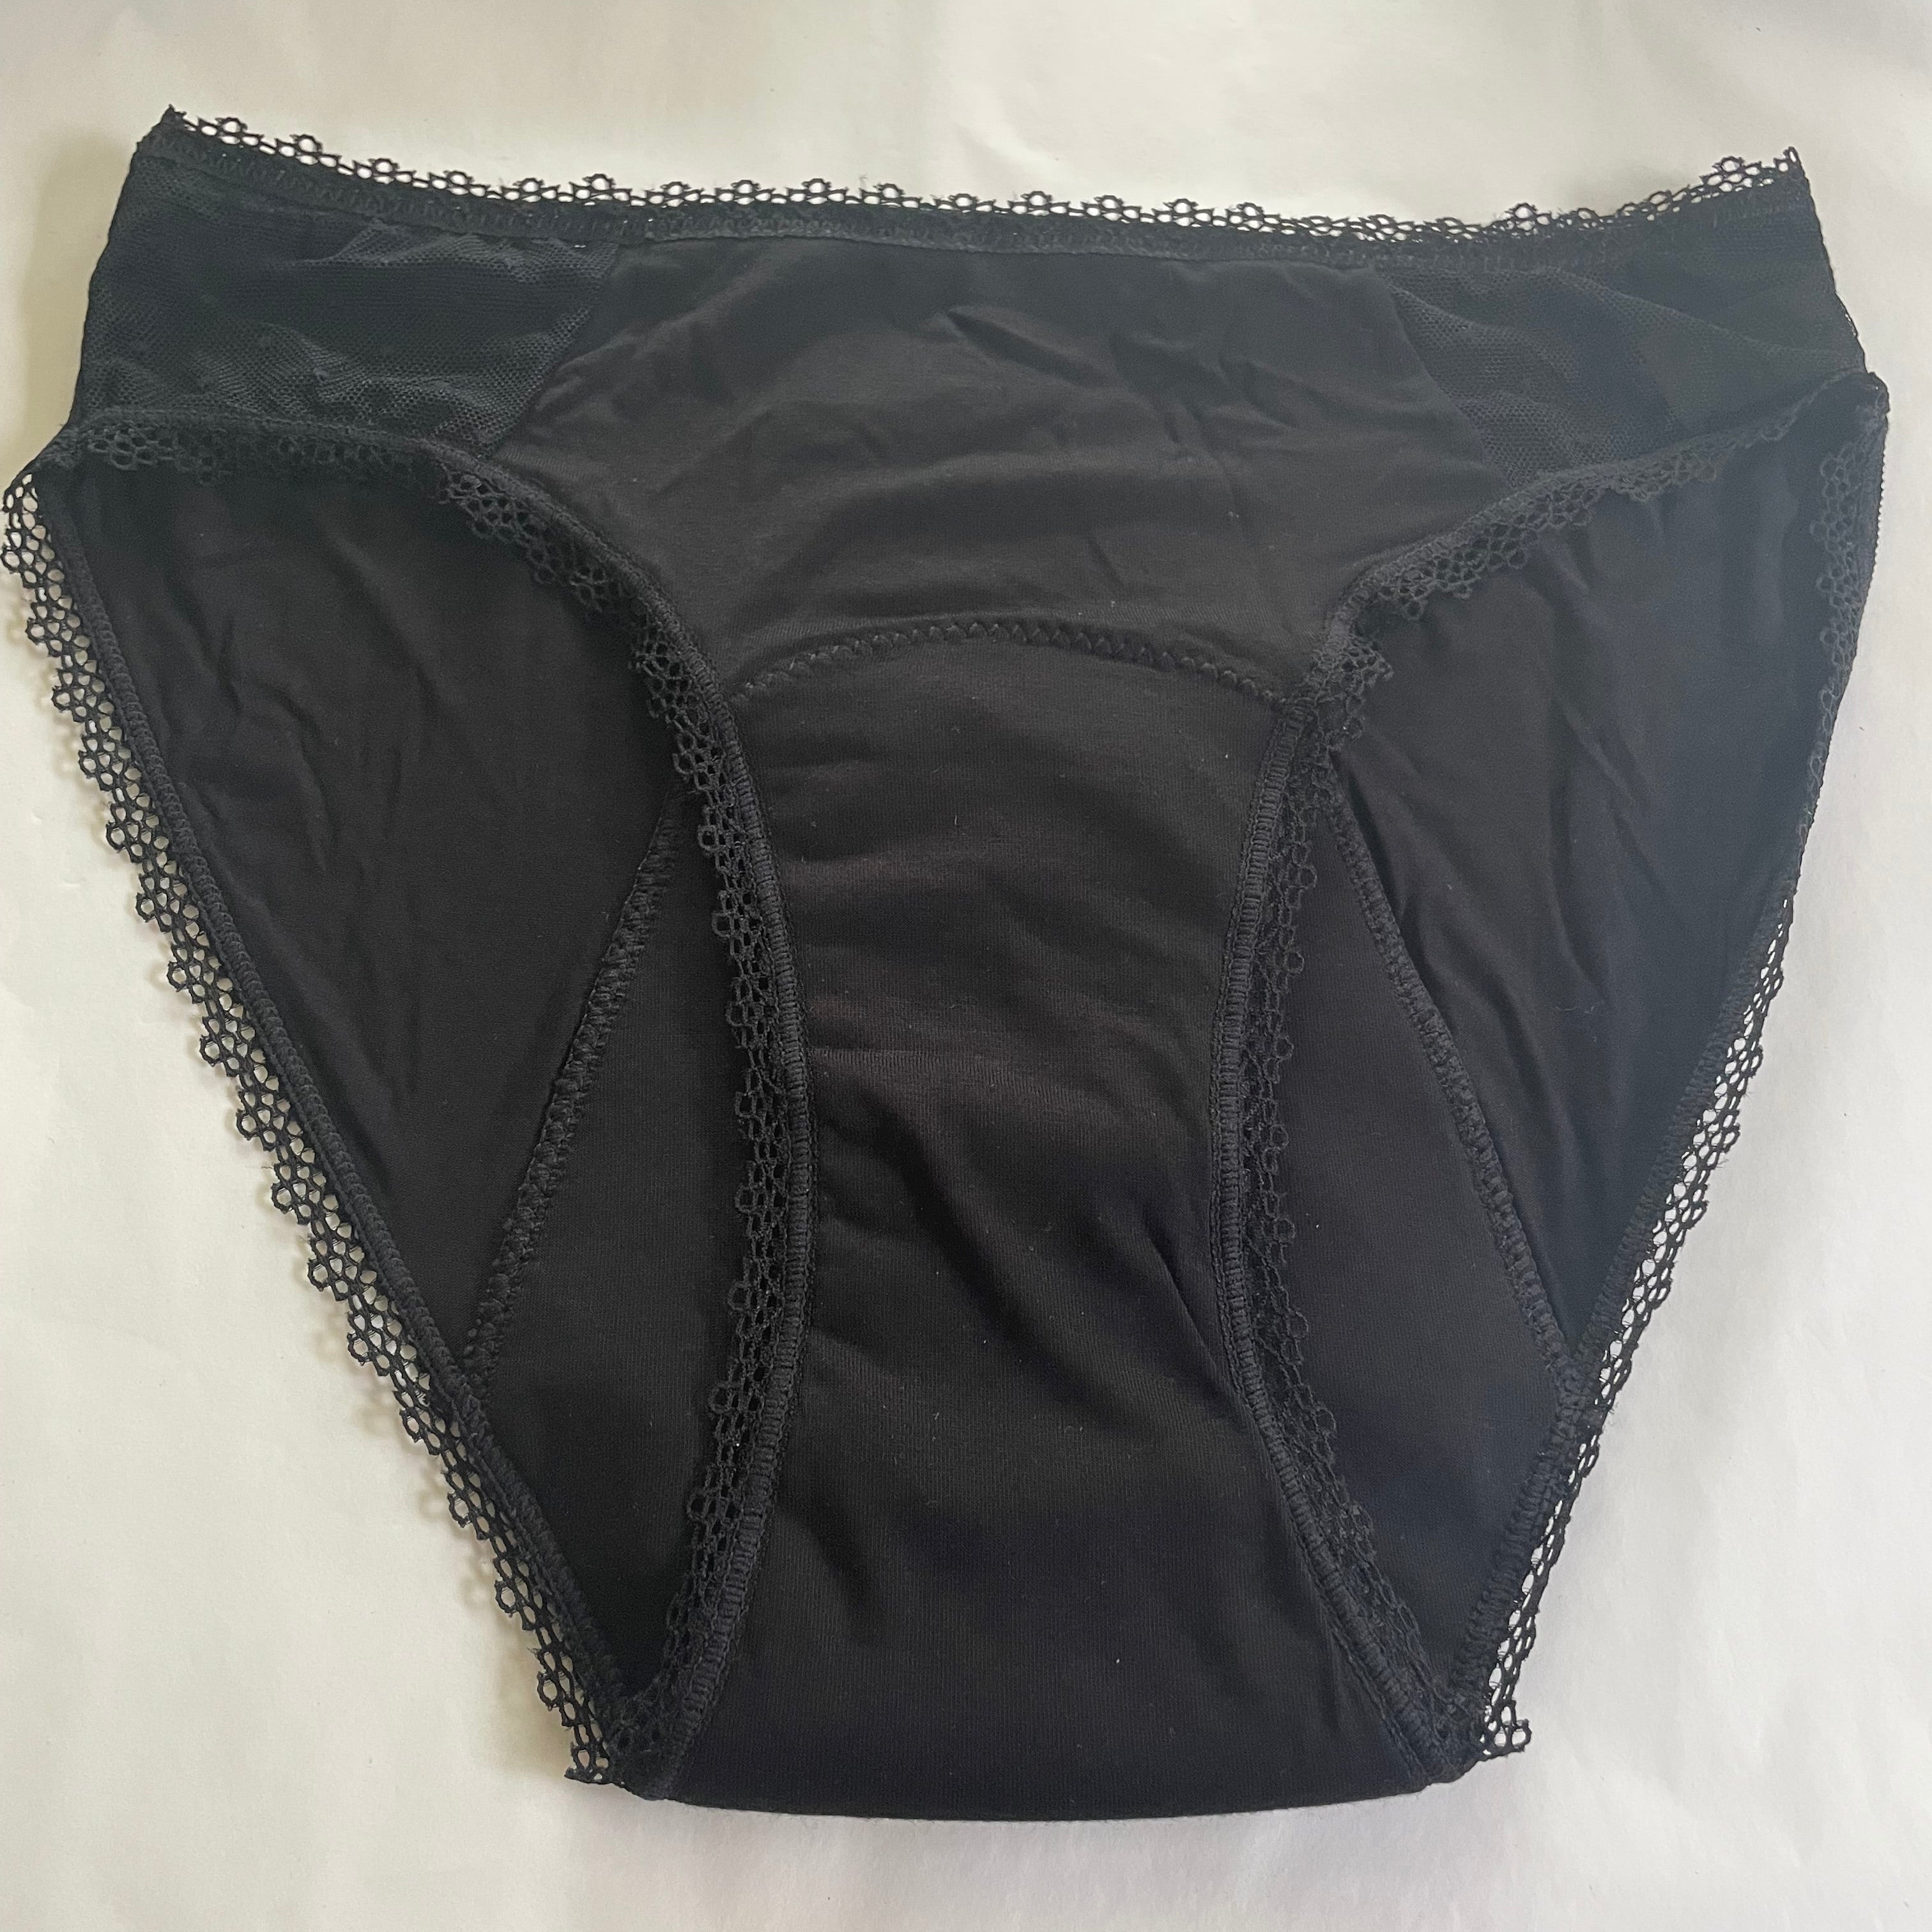 Leak Proof Period Underwear